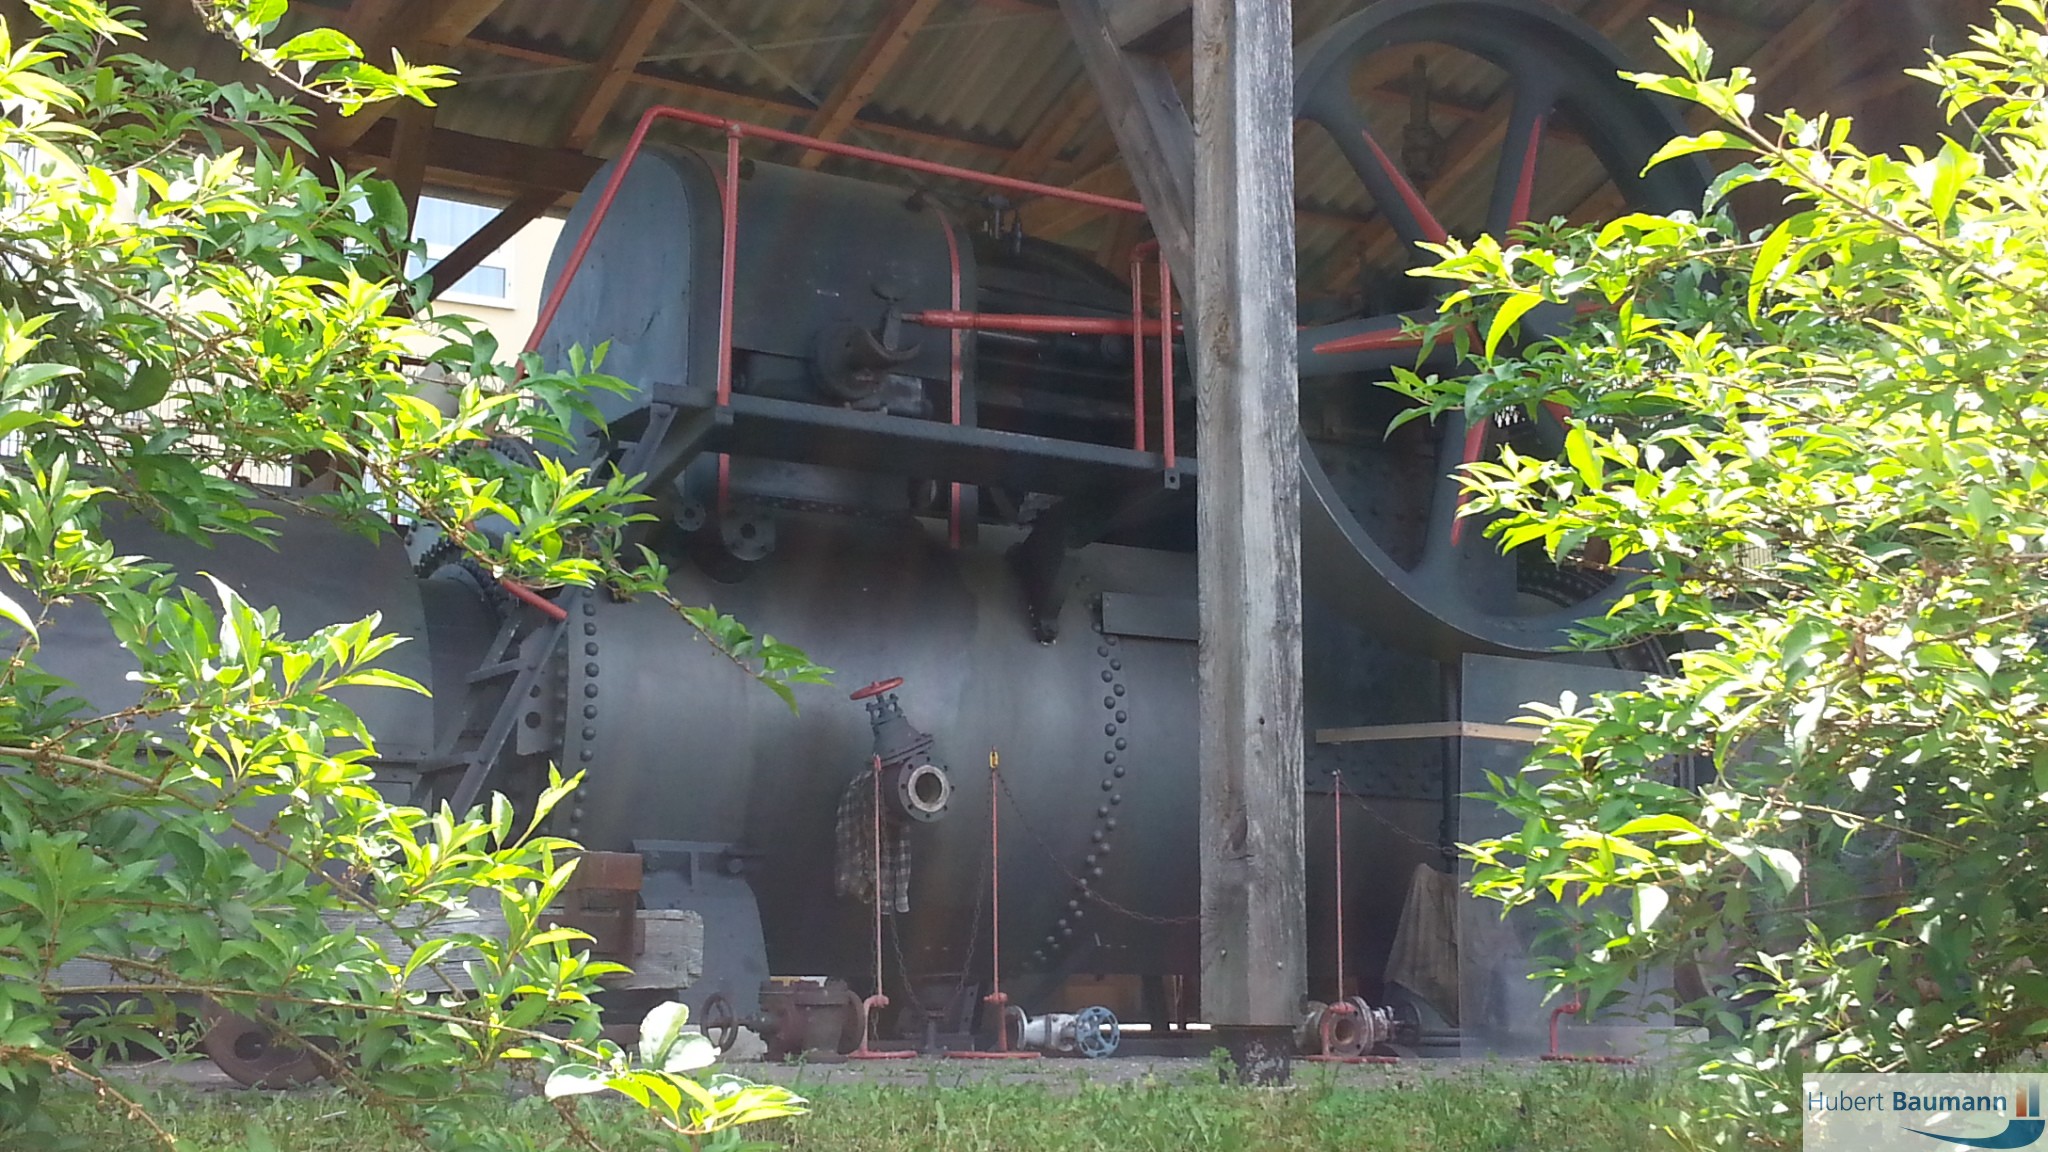 Alte Dampfmaschine in Elsenfeld - Kategorien: Outdoor-Erlebnisse  Dampfmaschine-Elsenfeld-Bahnhof